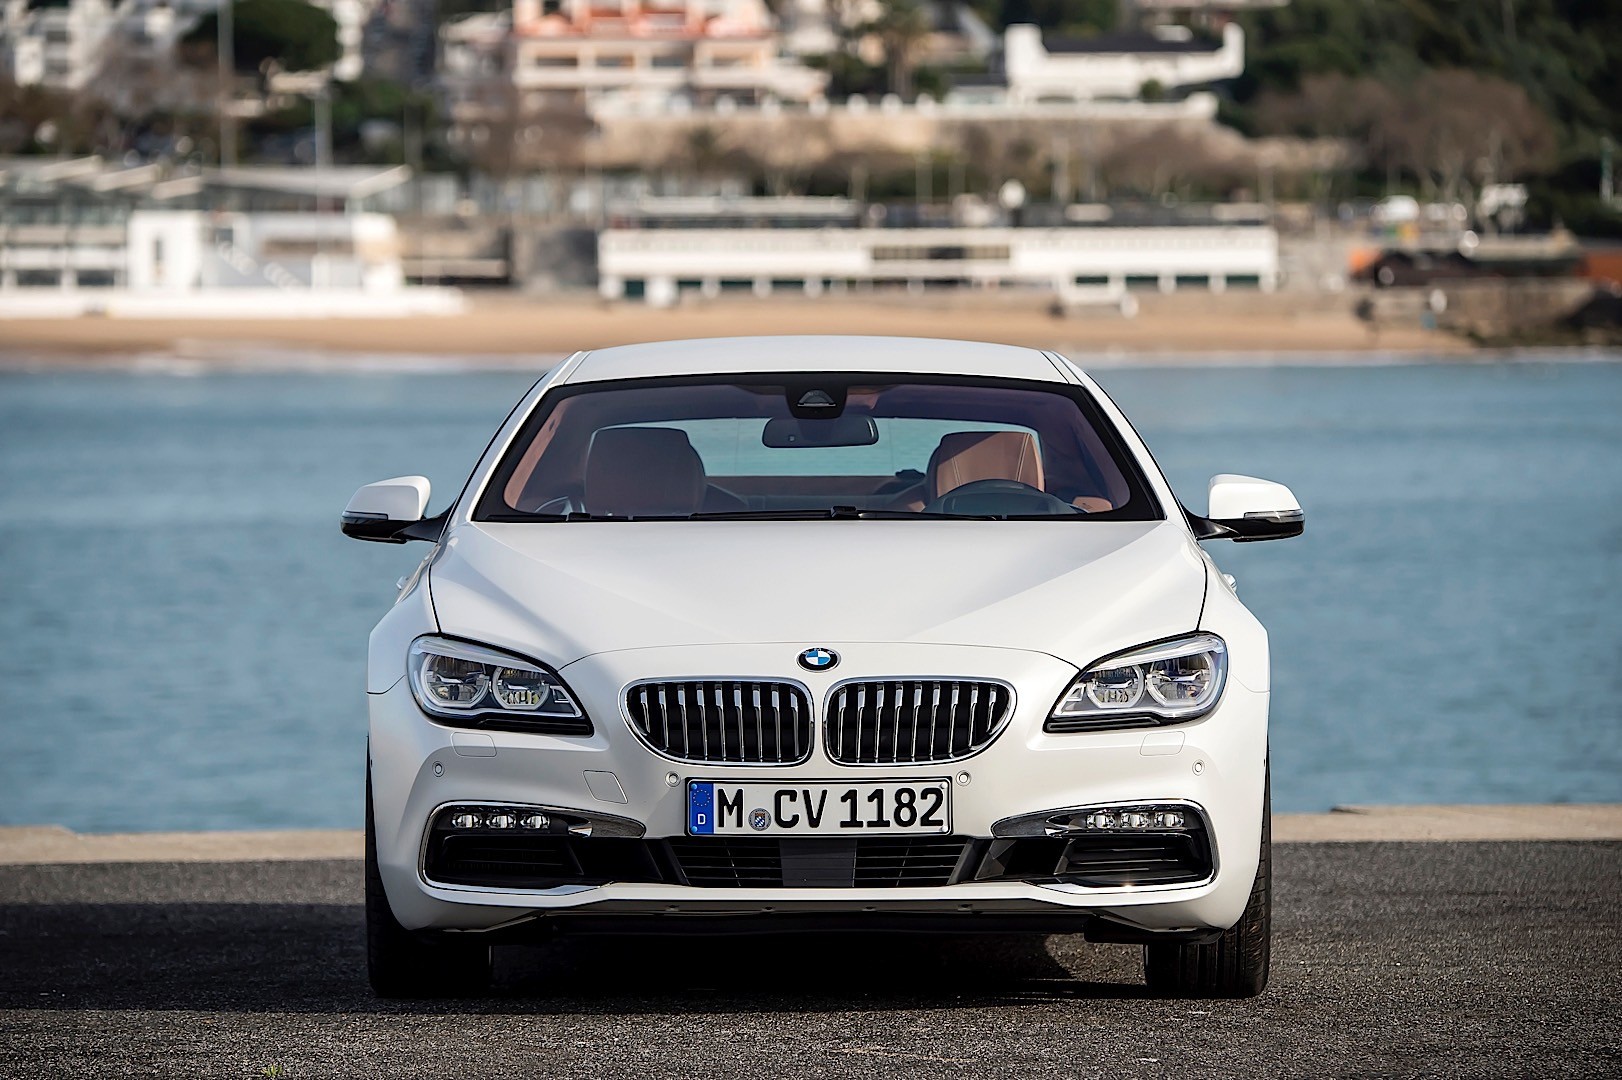 BMW 6er Gran Coupé (F06) seit 2012